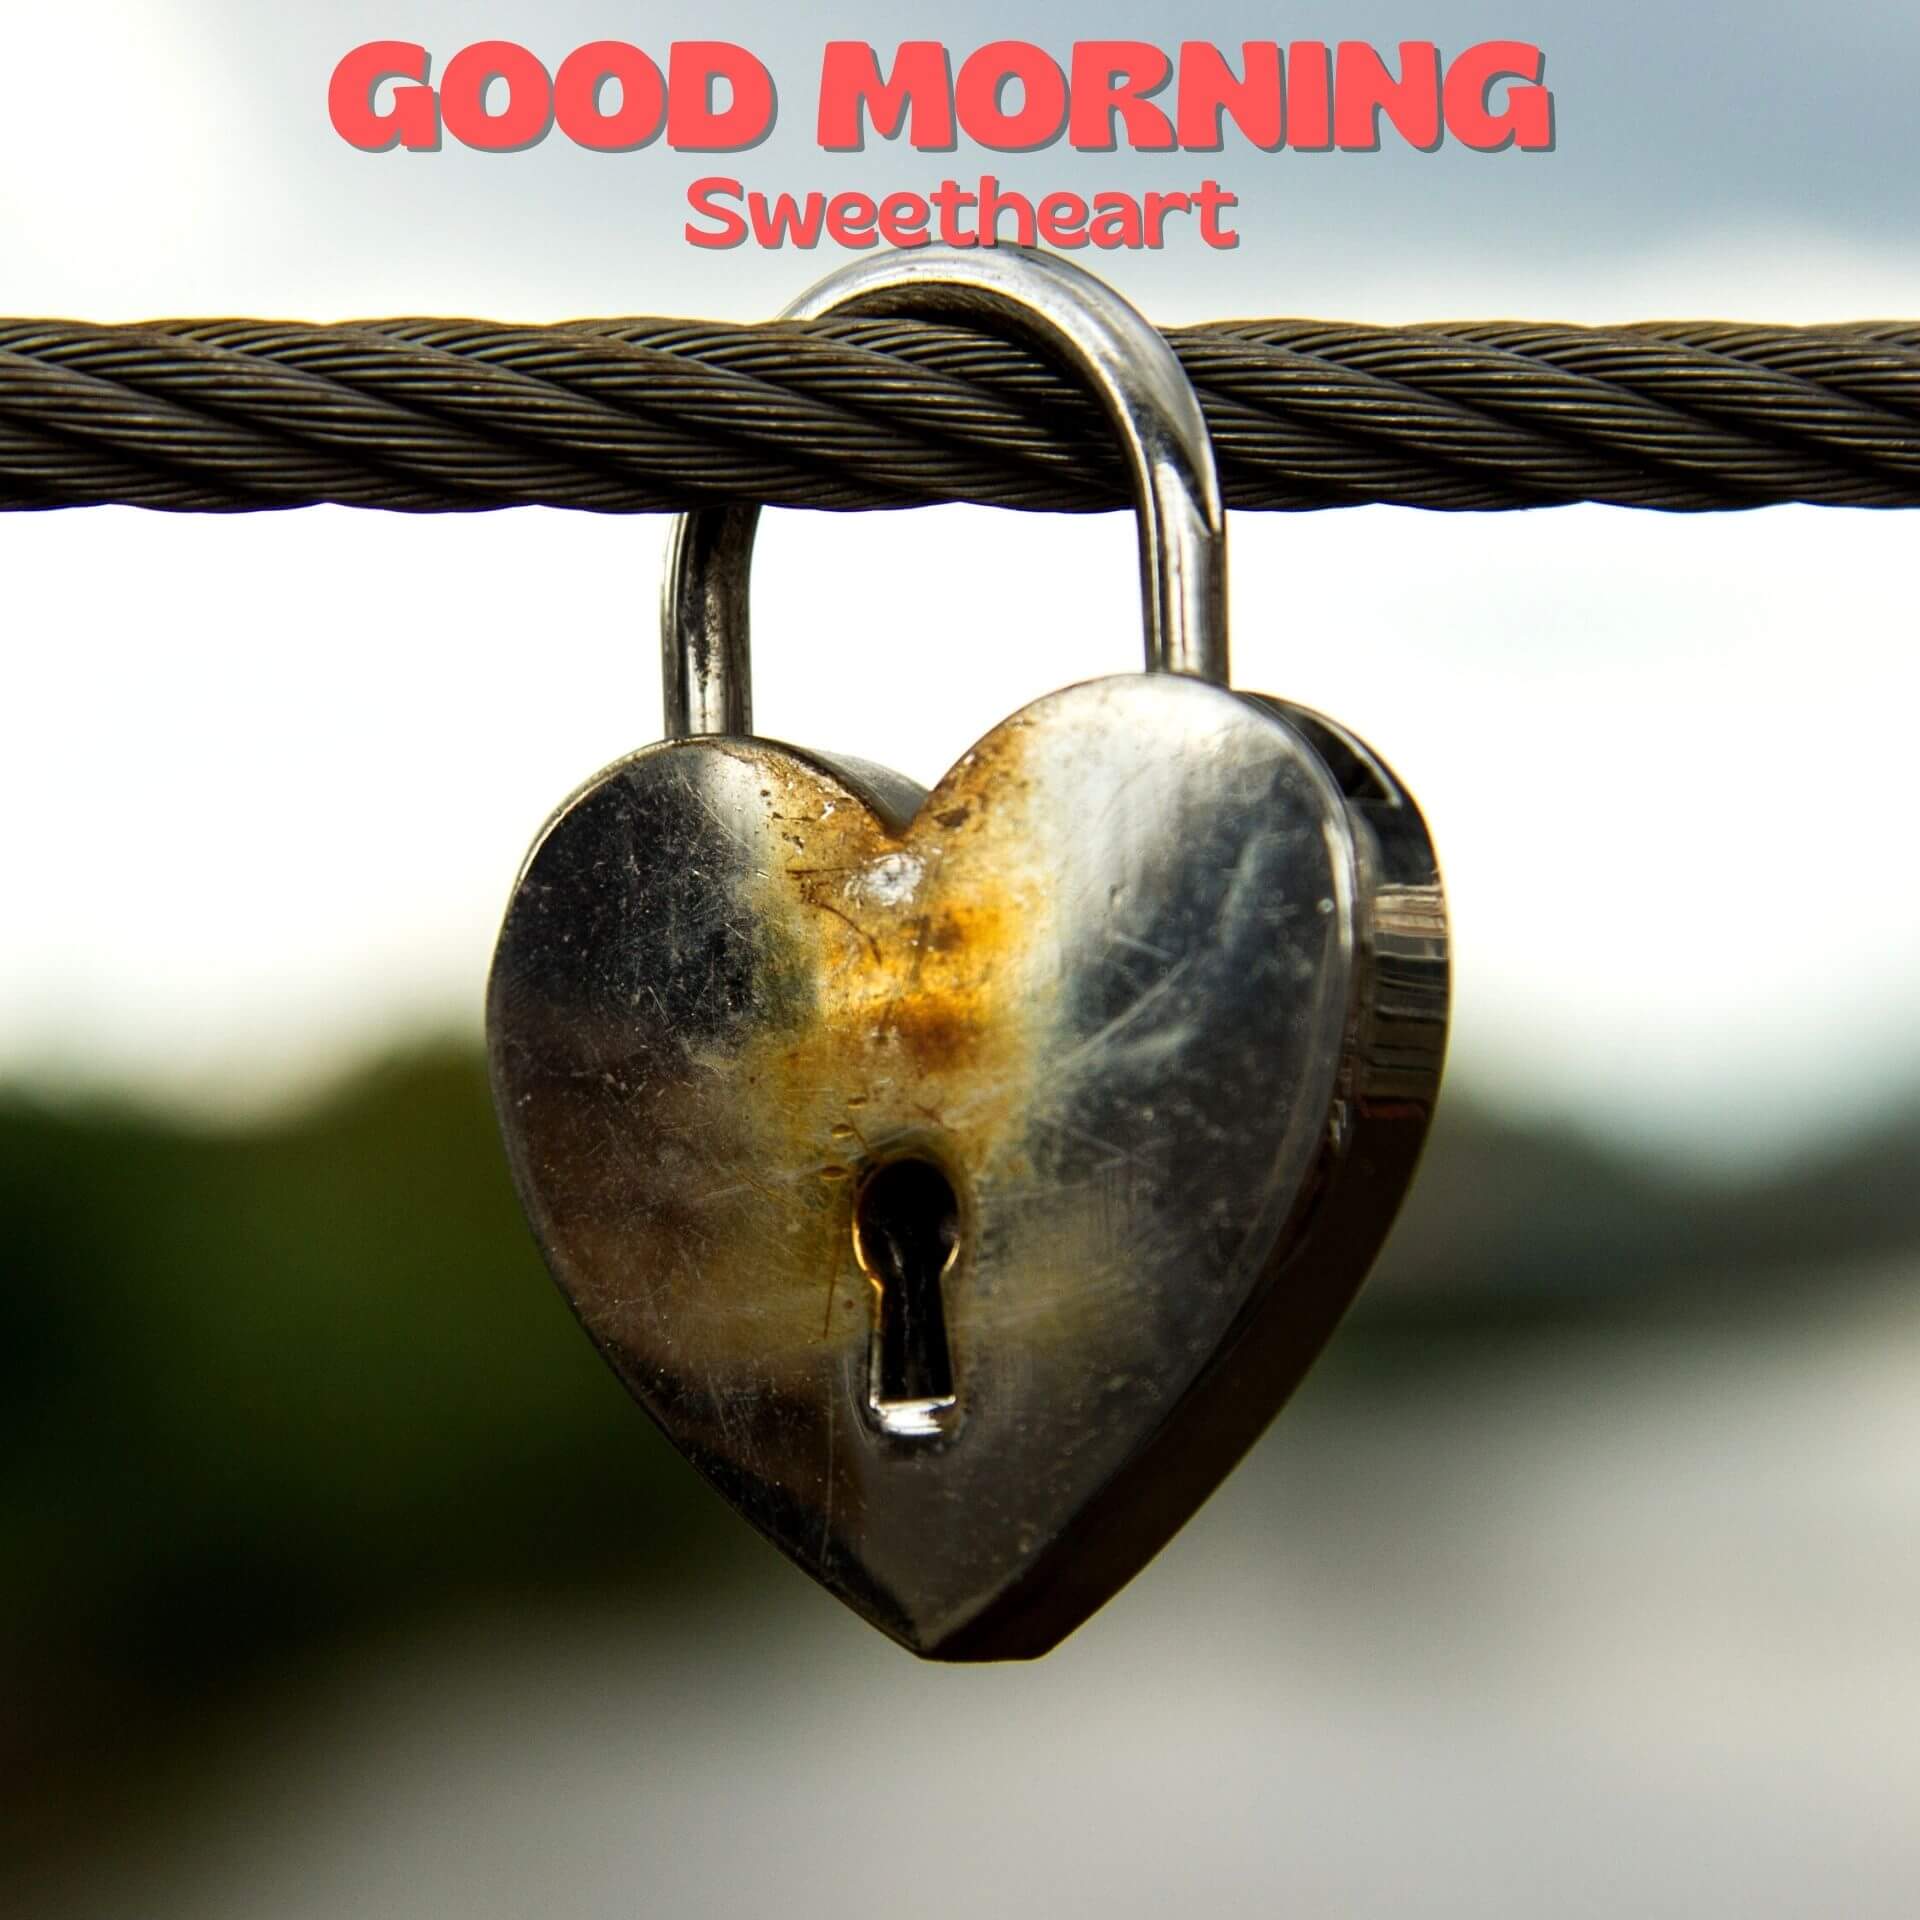 Romantic Good Morning Wallpaper Free Download 3